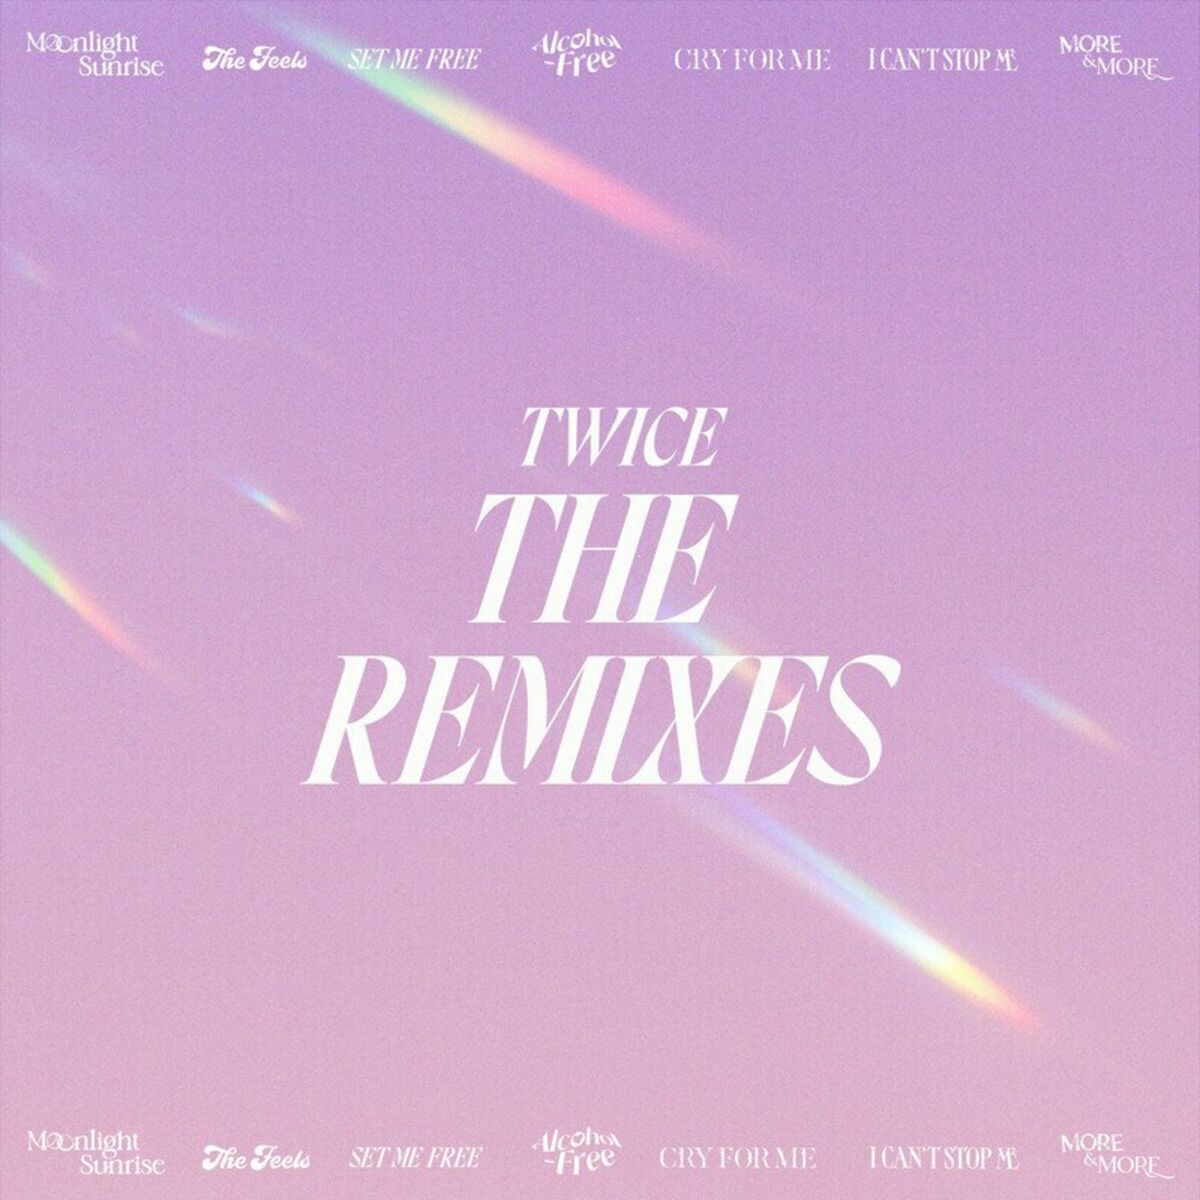 TWICE – MOONLIGHT SUNRISE (Jonas Blue Remix) – Single